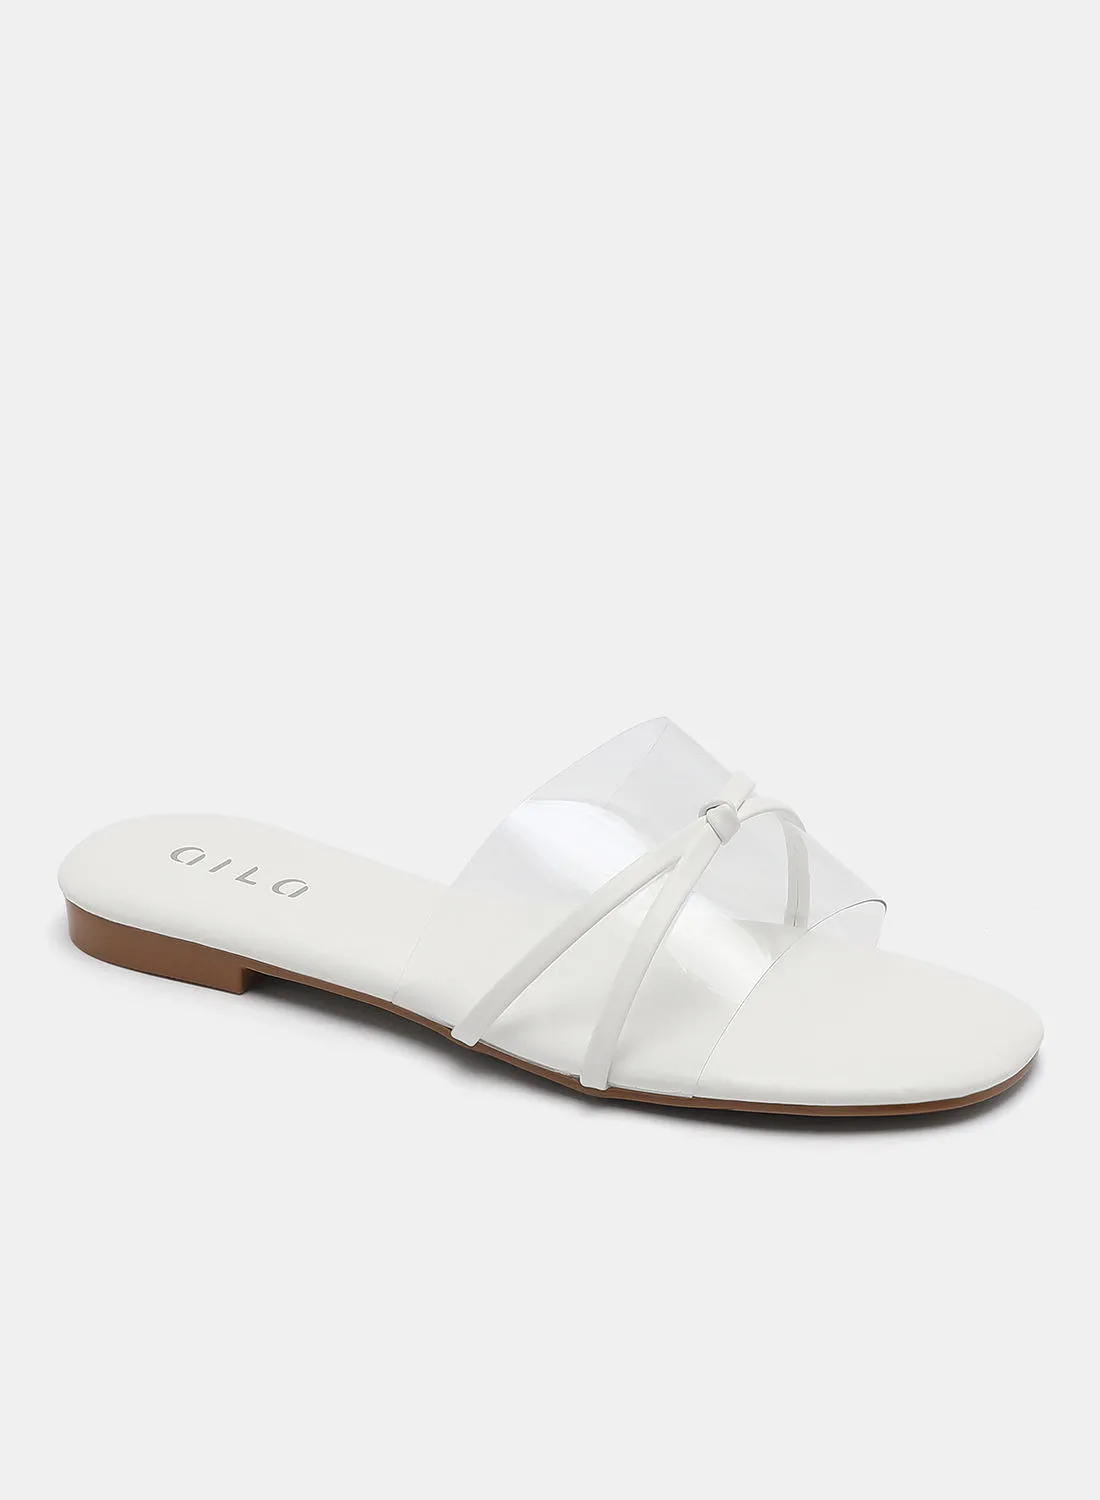 Aila Slip-On Casual Flat Sandals White